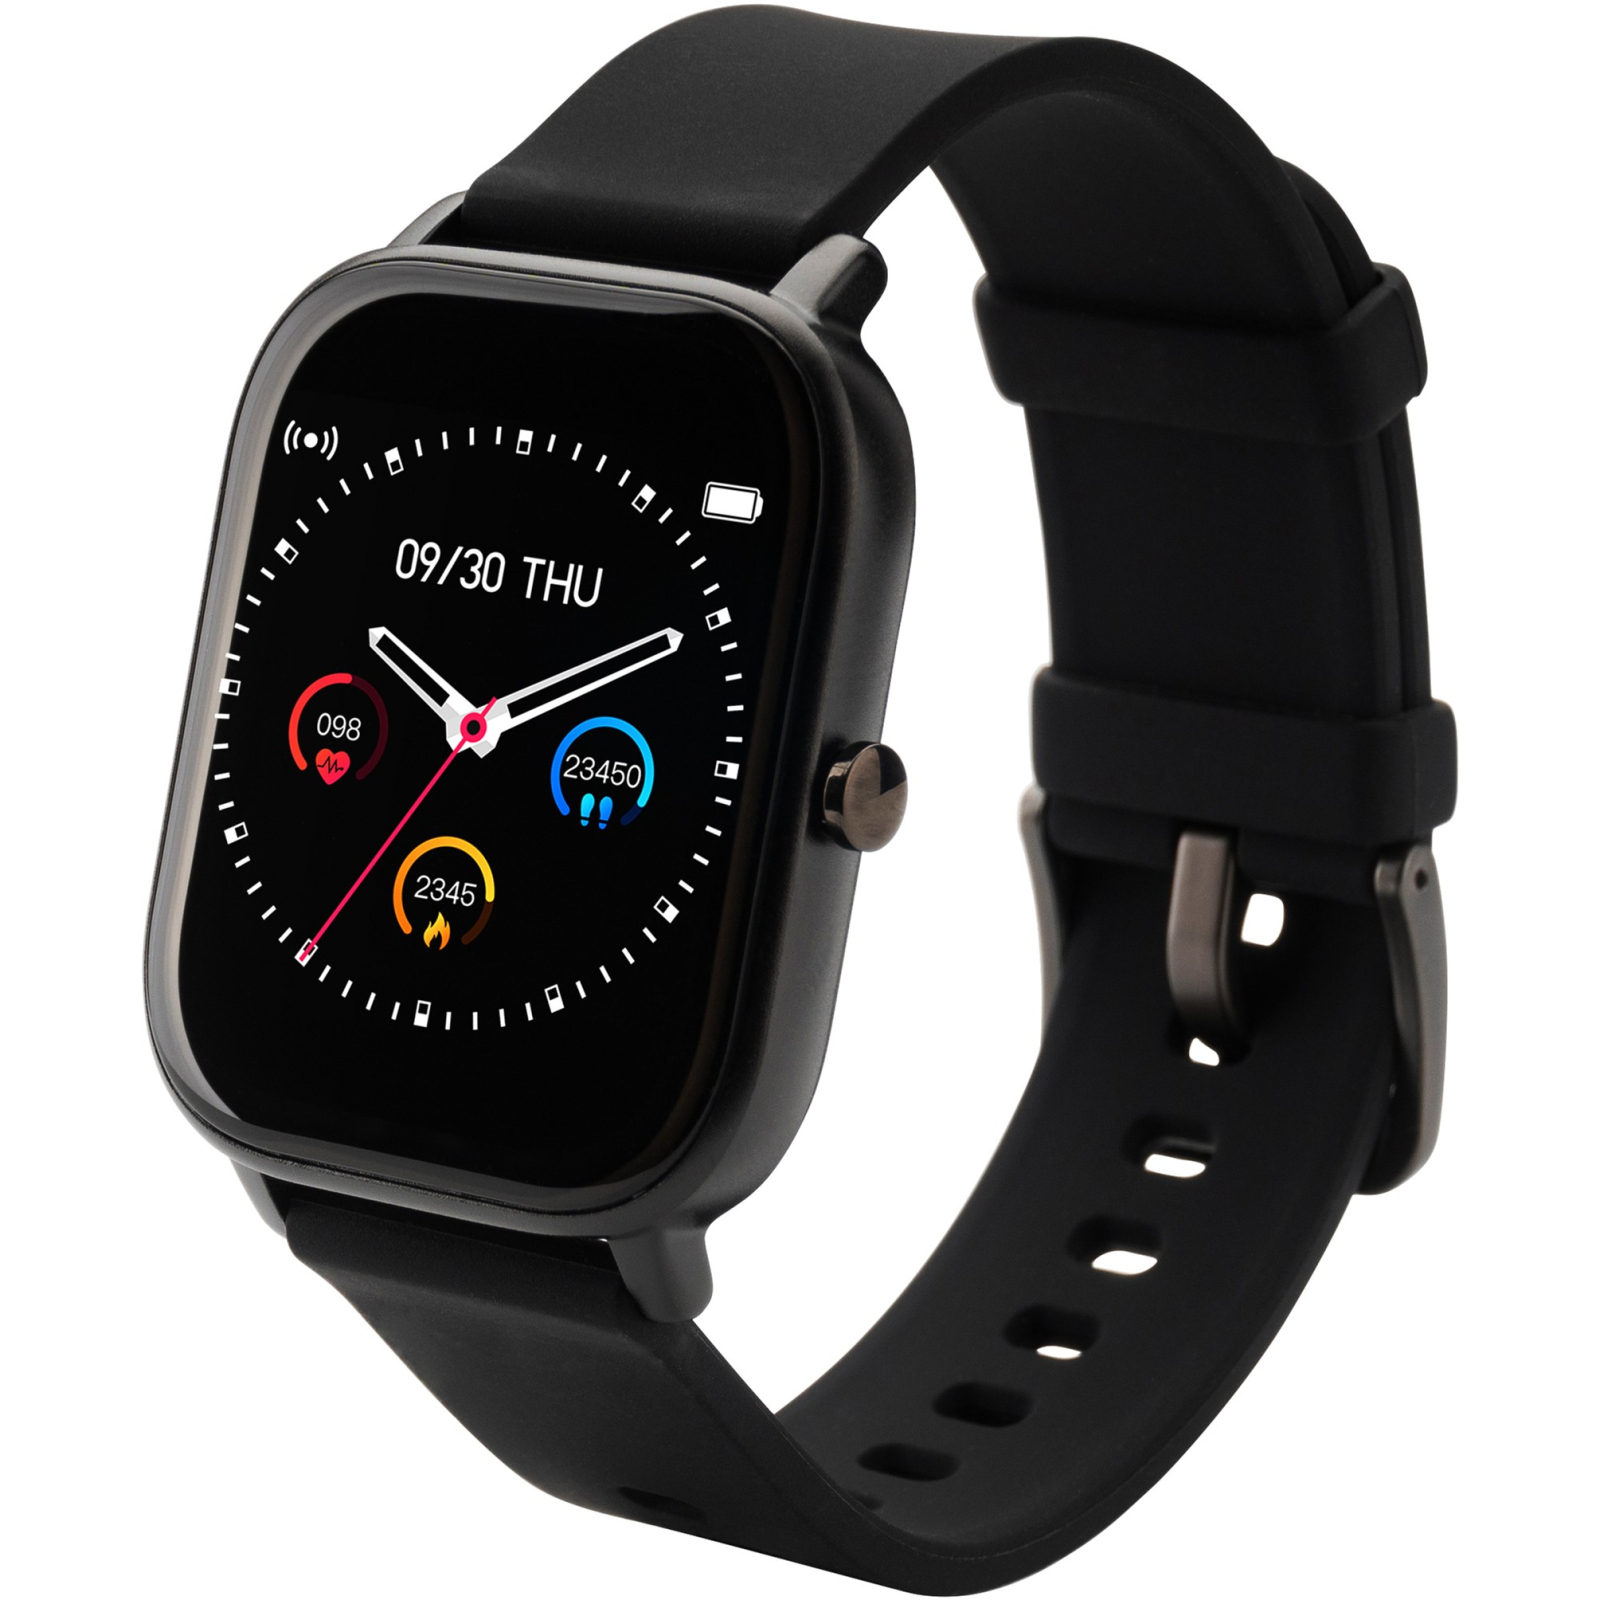 Смарт-часы Globex Smart Watch Me (Black)